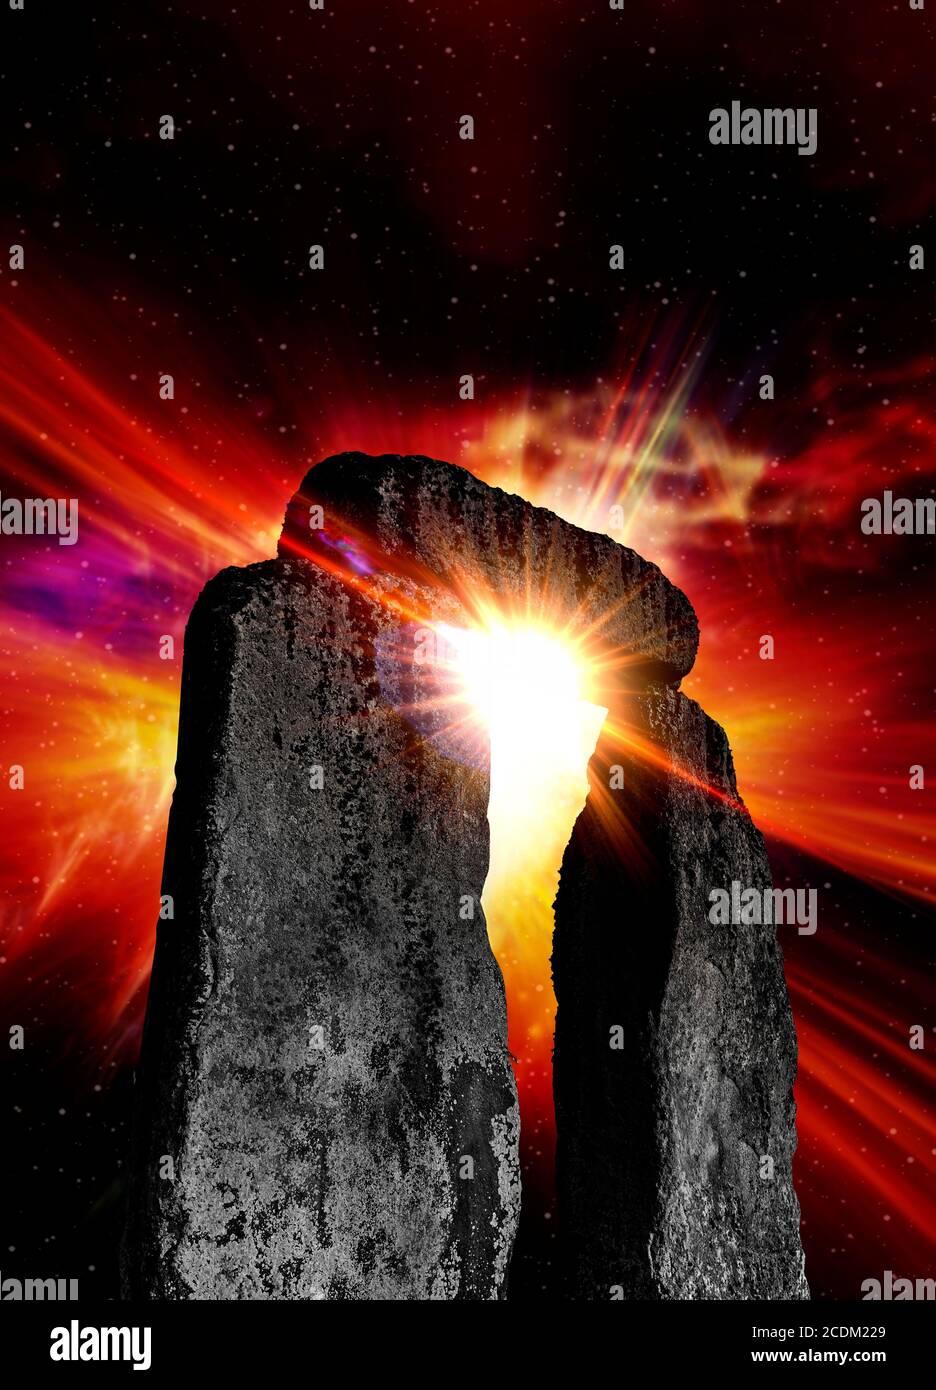 Sun shining through standing stone, illustration. Stock Photo